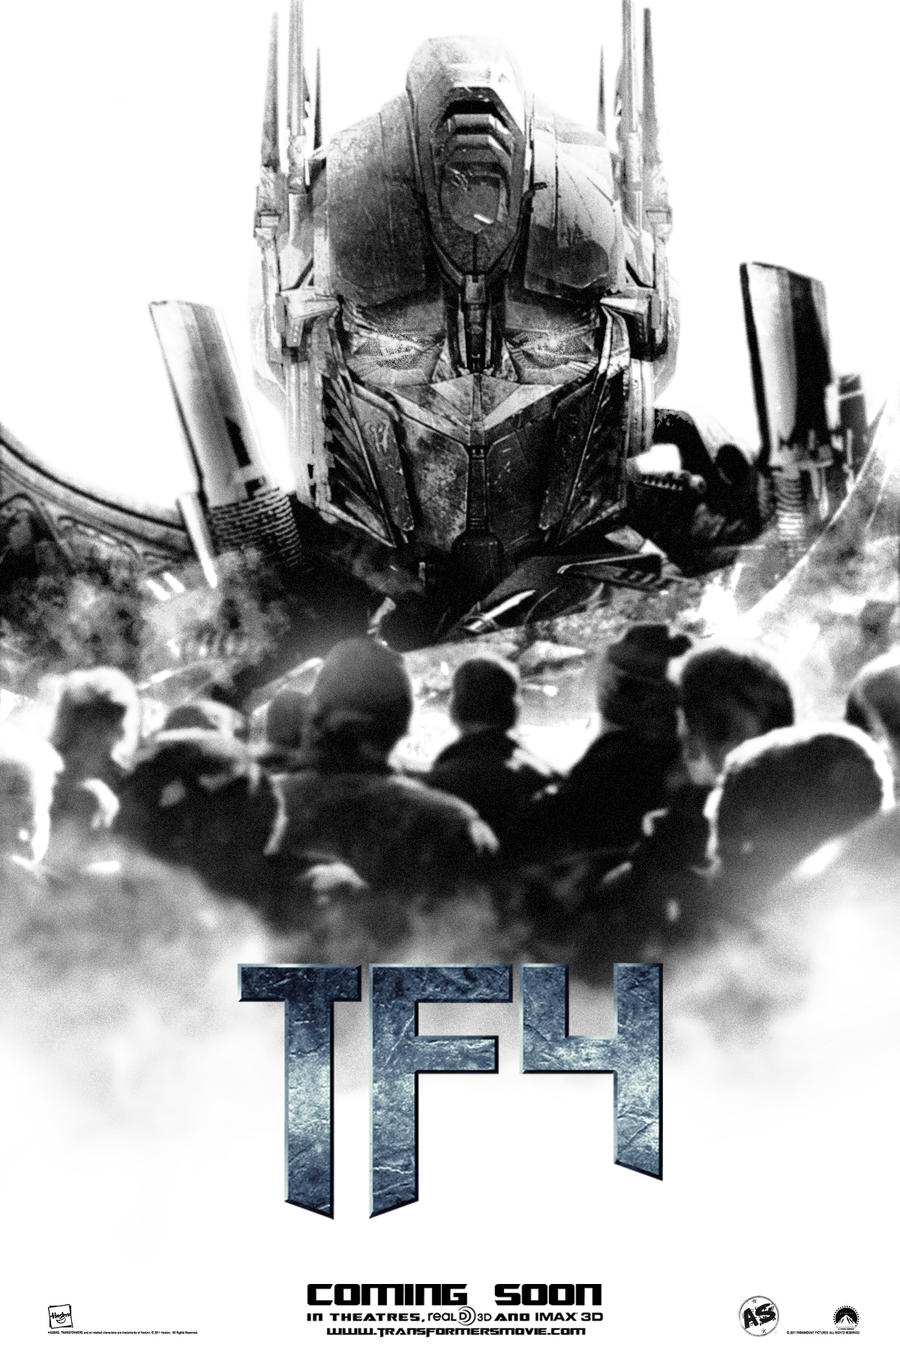 Transformers 4 - teaser poster